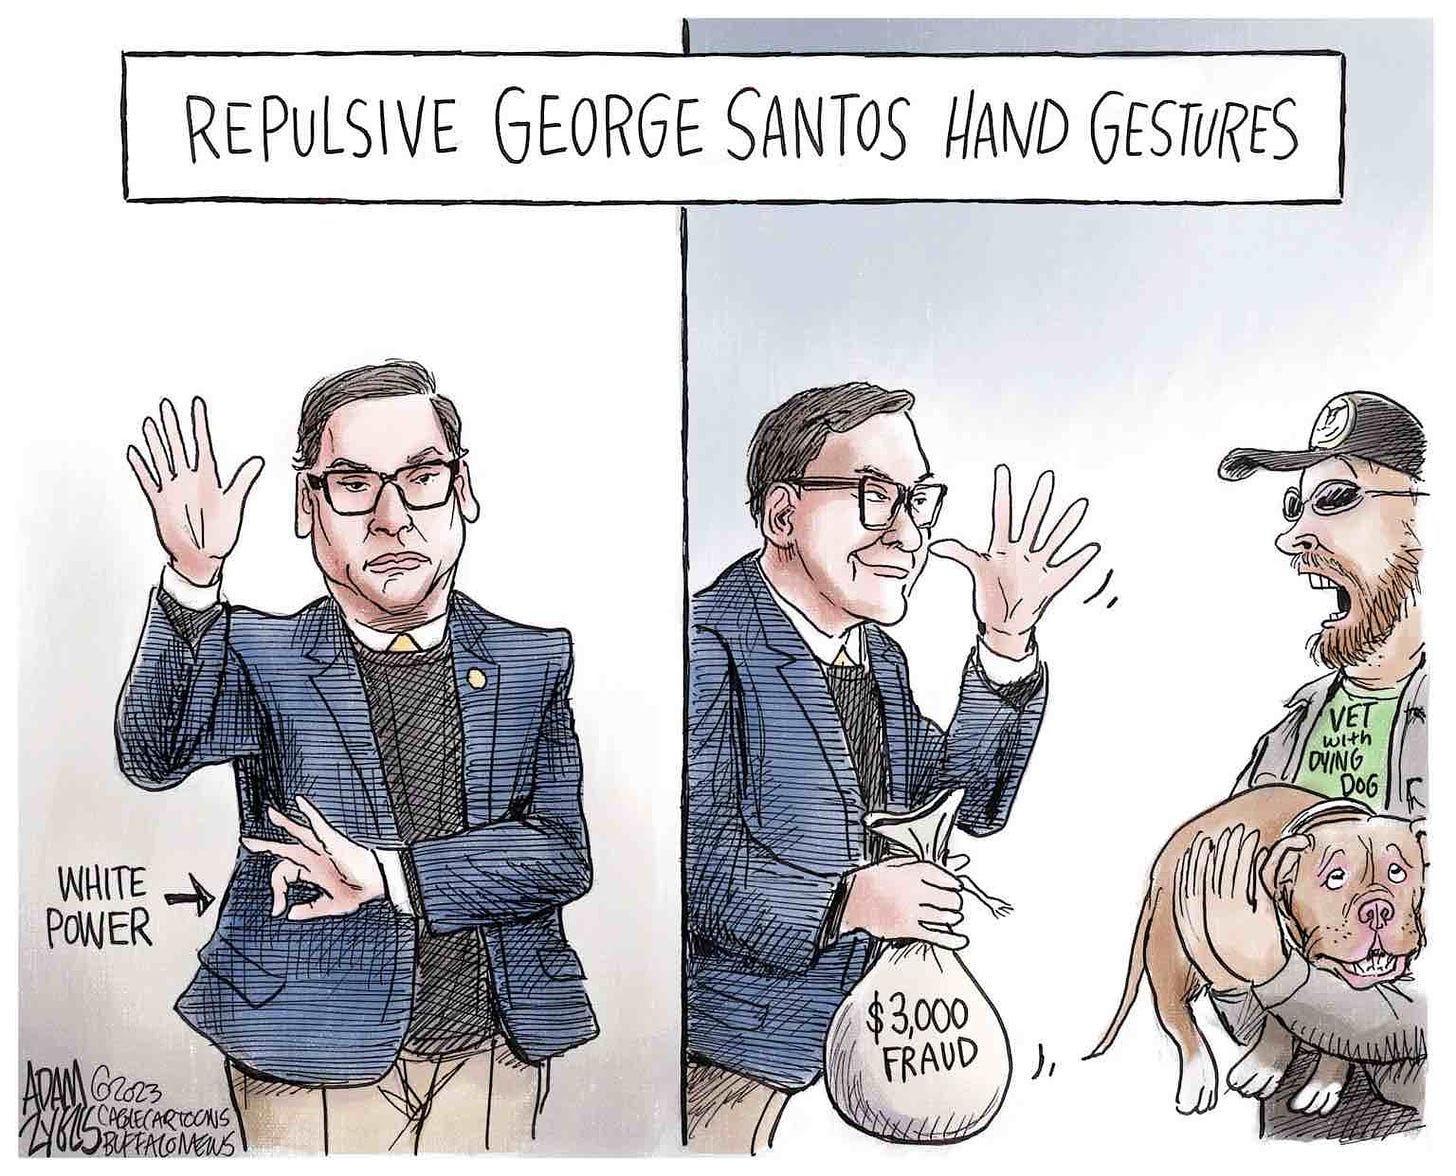 Republicans and George Santos disrespect veterans